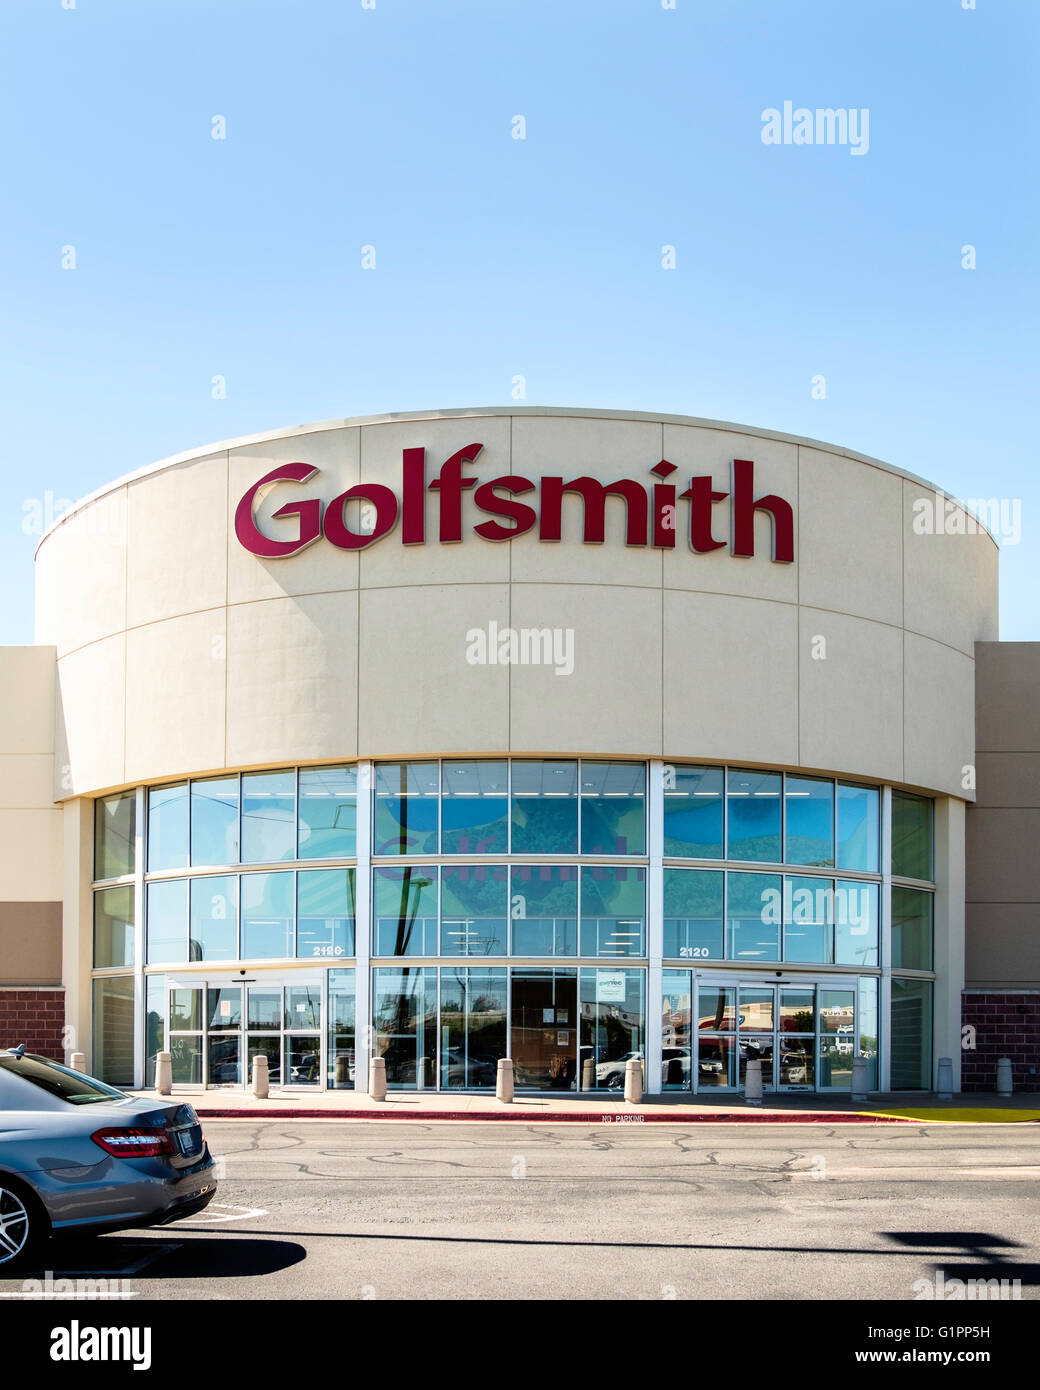 The exterior of Golfsmith, or Golfsmith International, a high-tec multi-channel retailer of golfing equipment. Oklahoma City, Ok Stock Photo